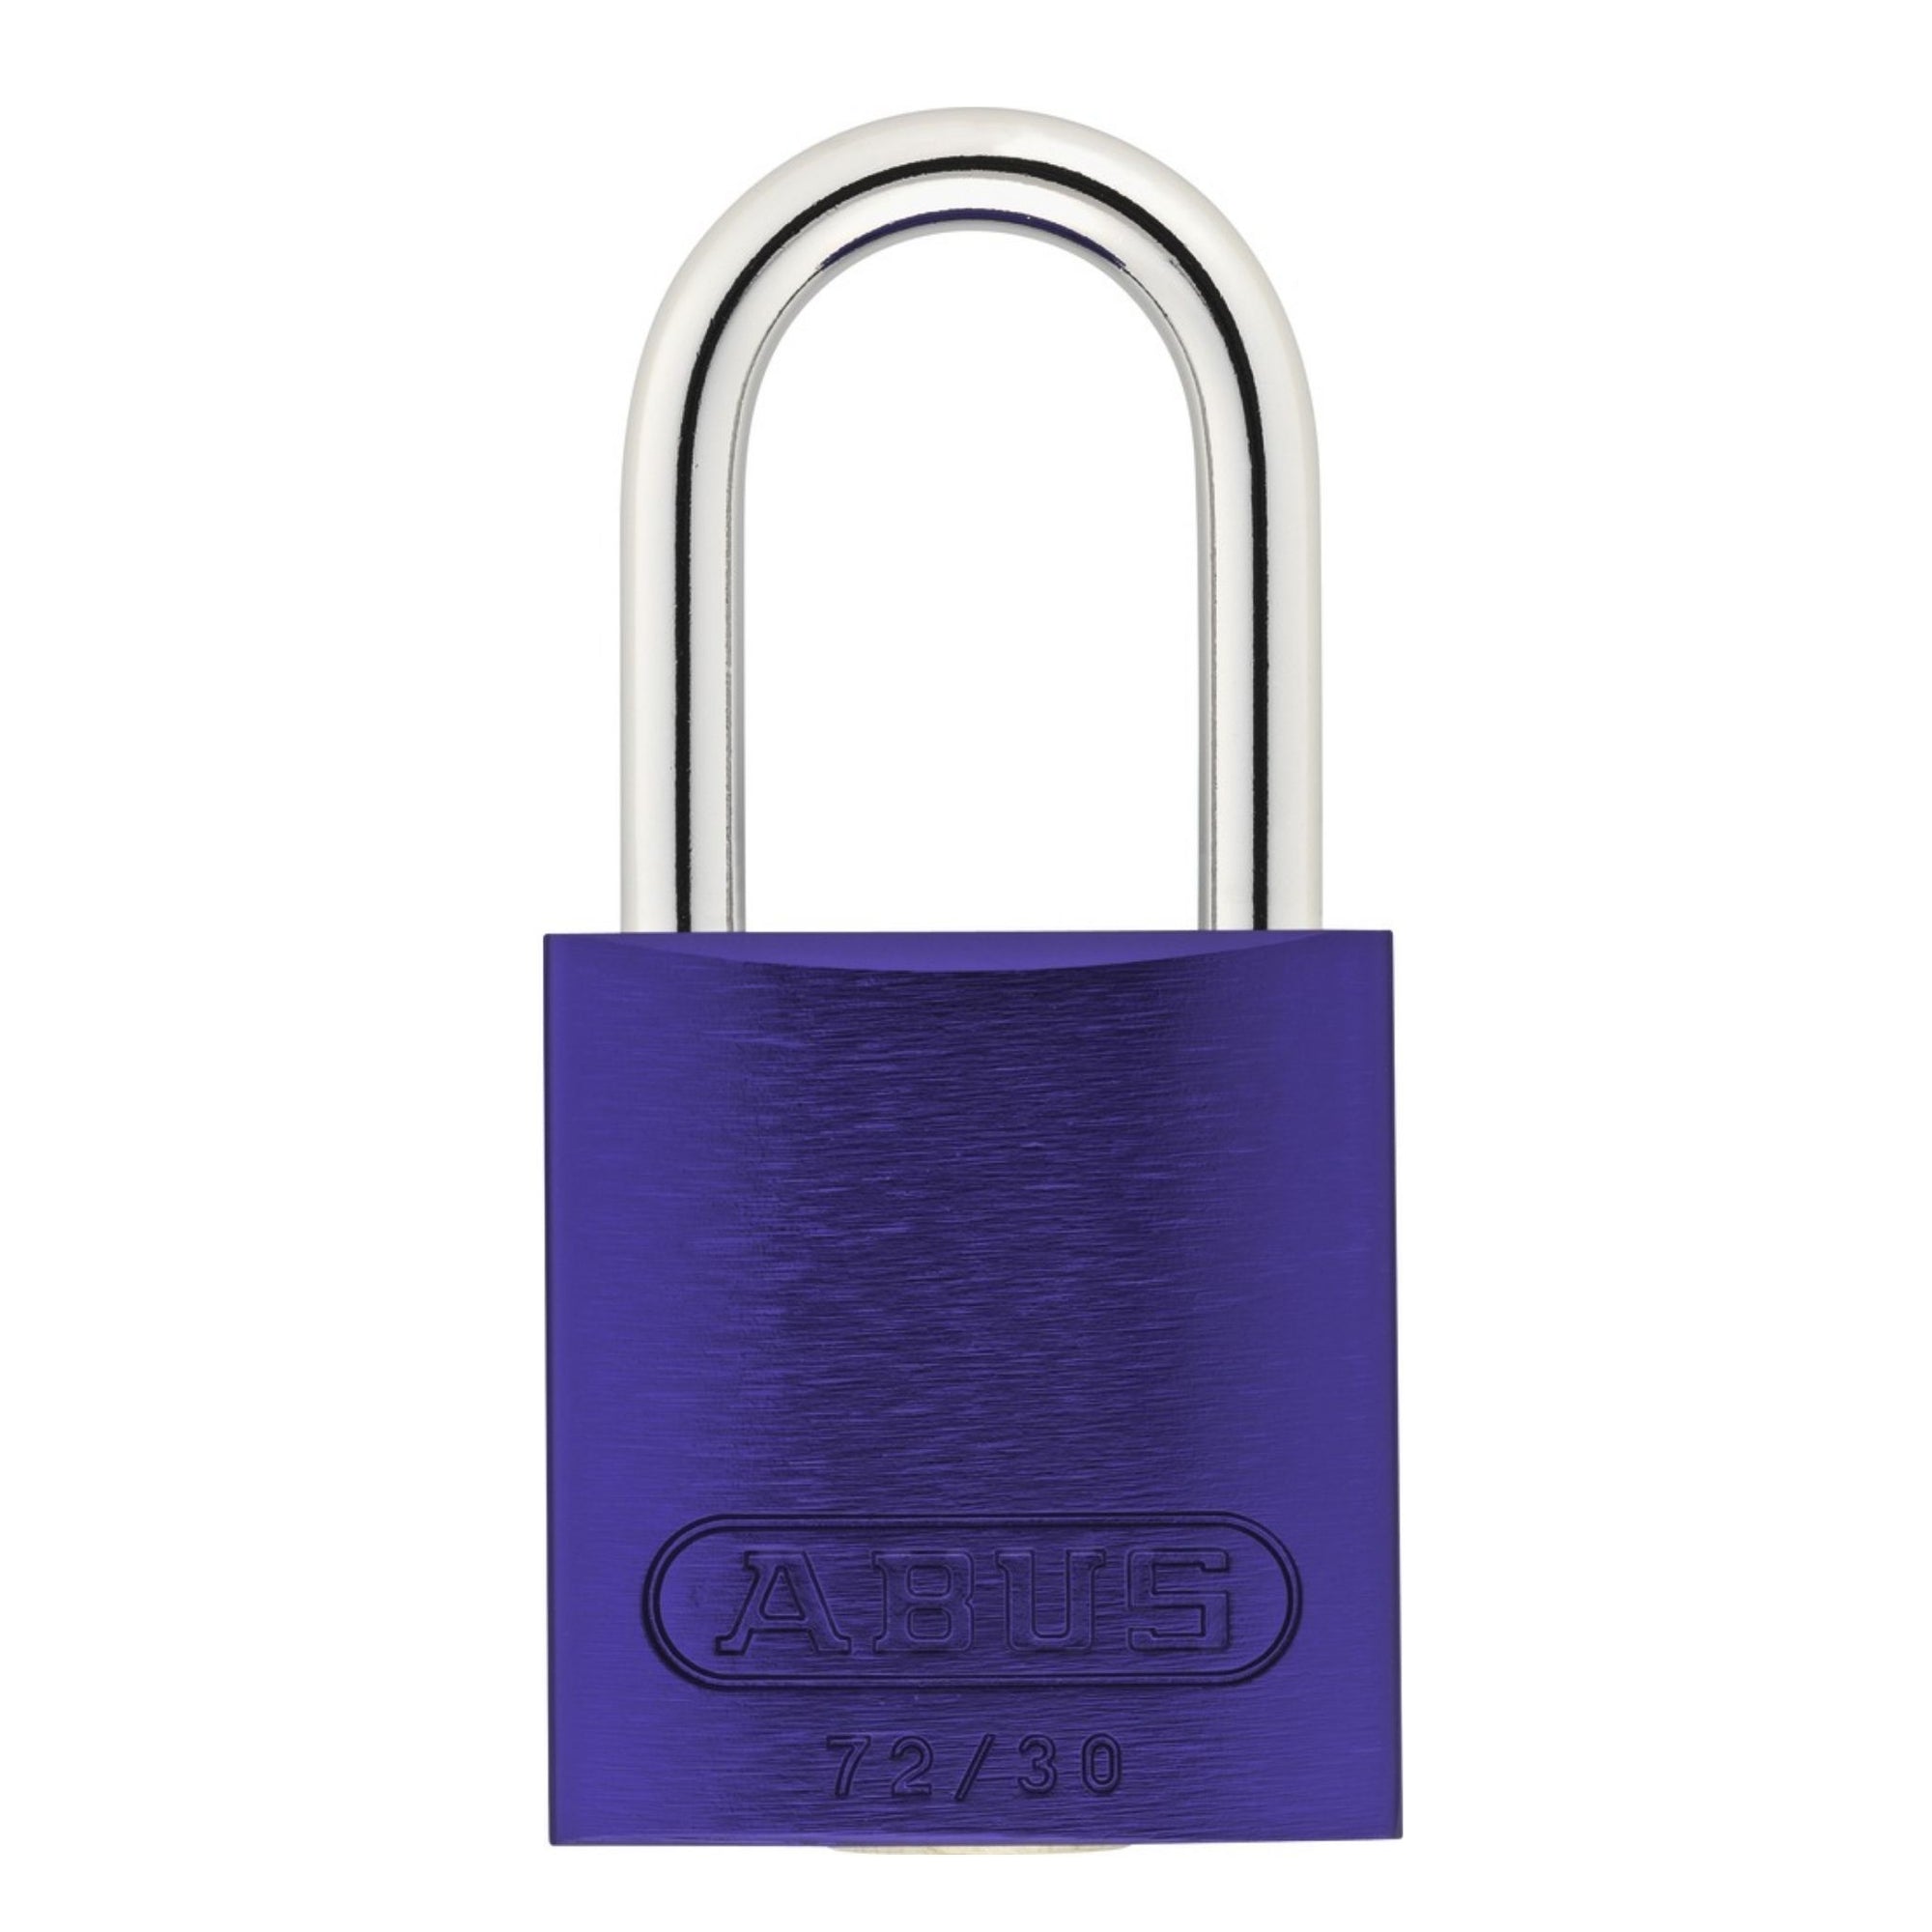 Abus 72/30 MK Purple Aluminum Safety Padlock Master Keyed Locks - The Lock Source